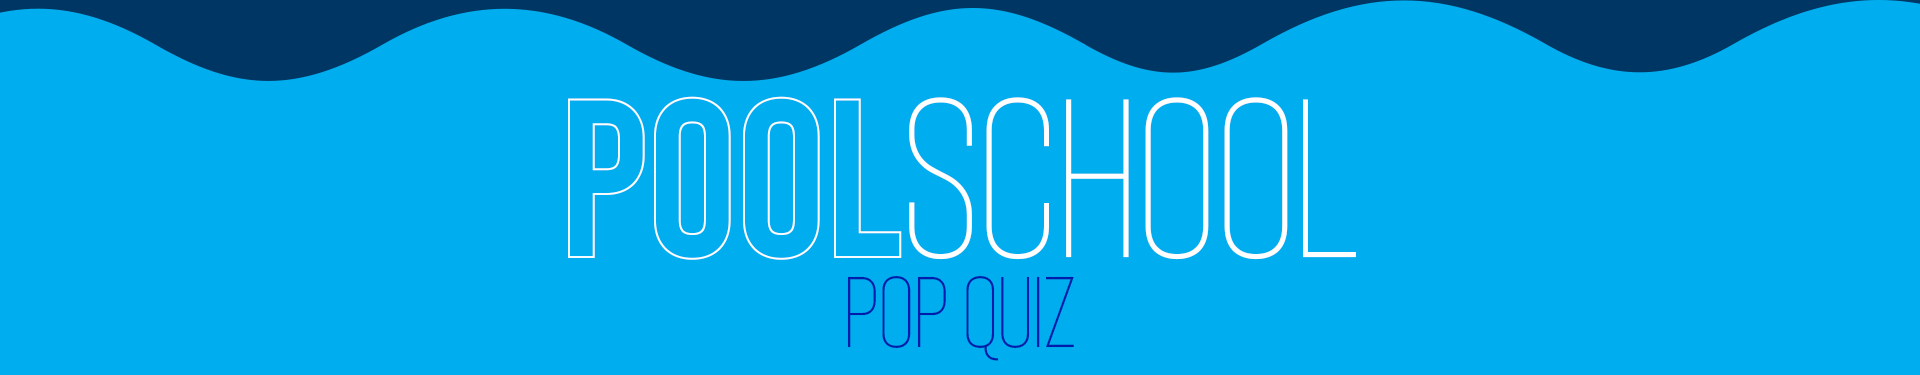 Continental Pool School Pop Quiz